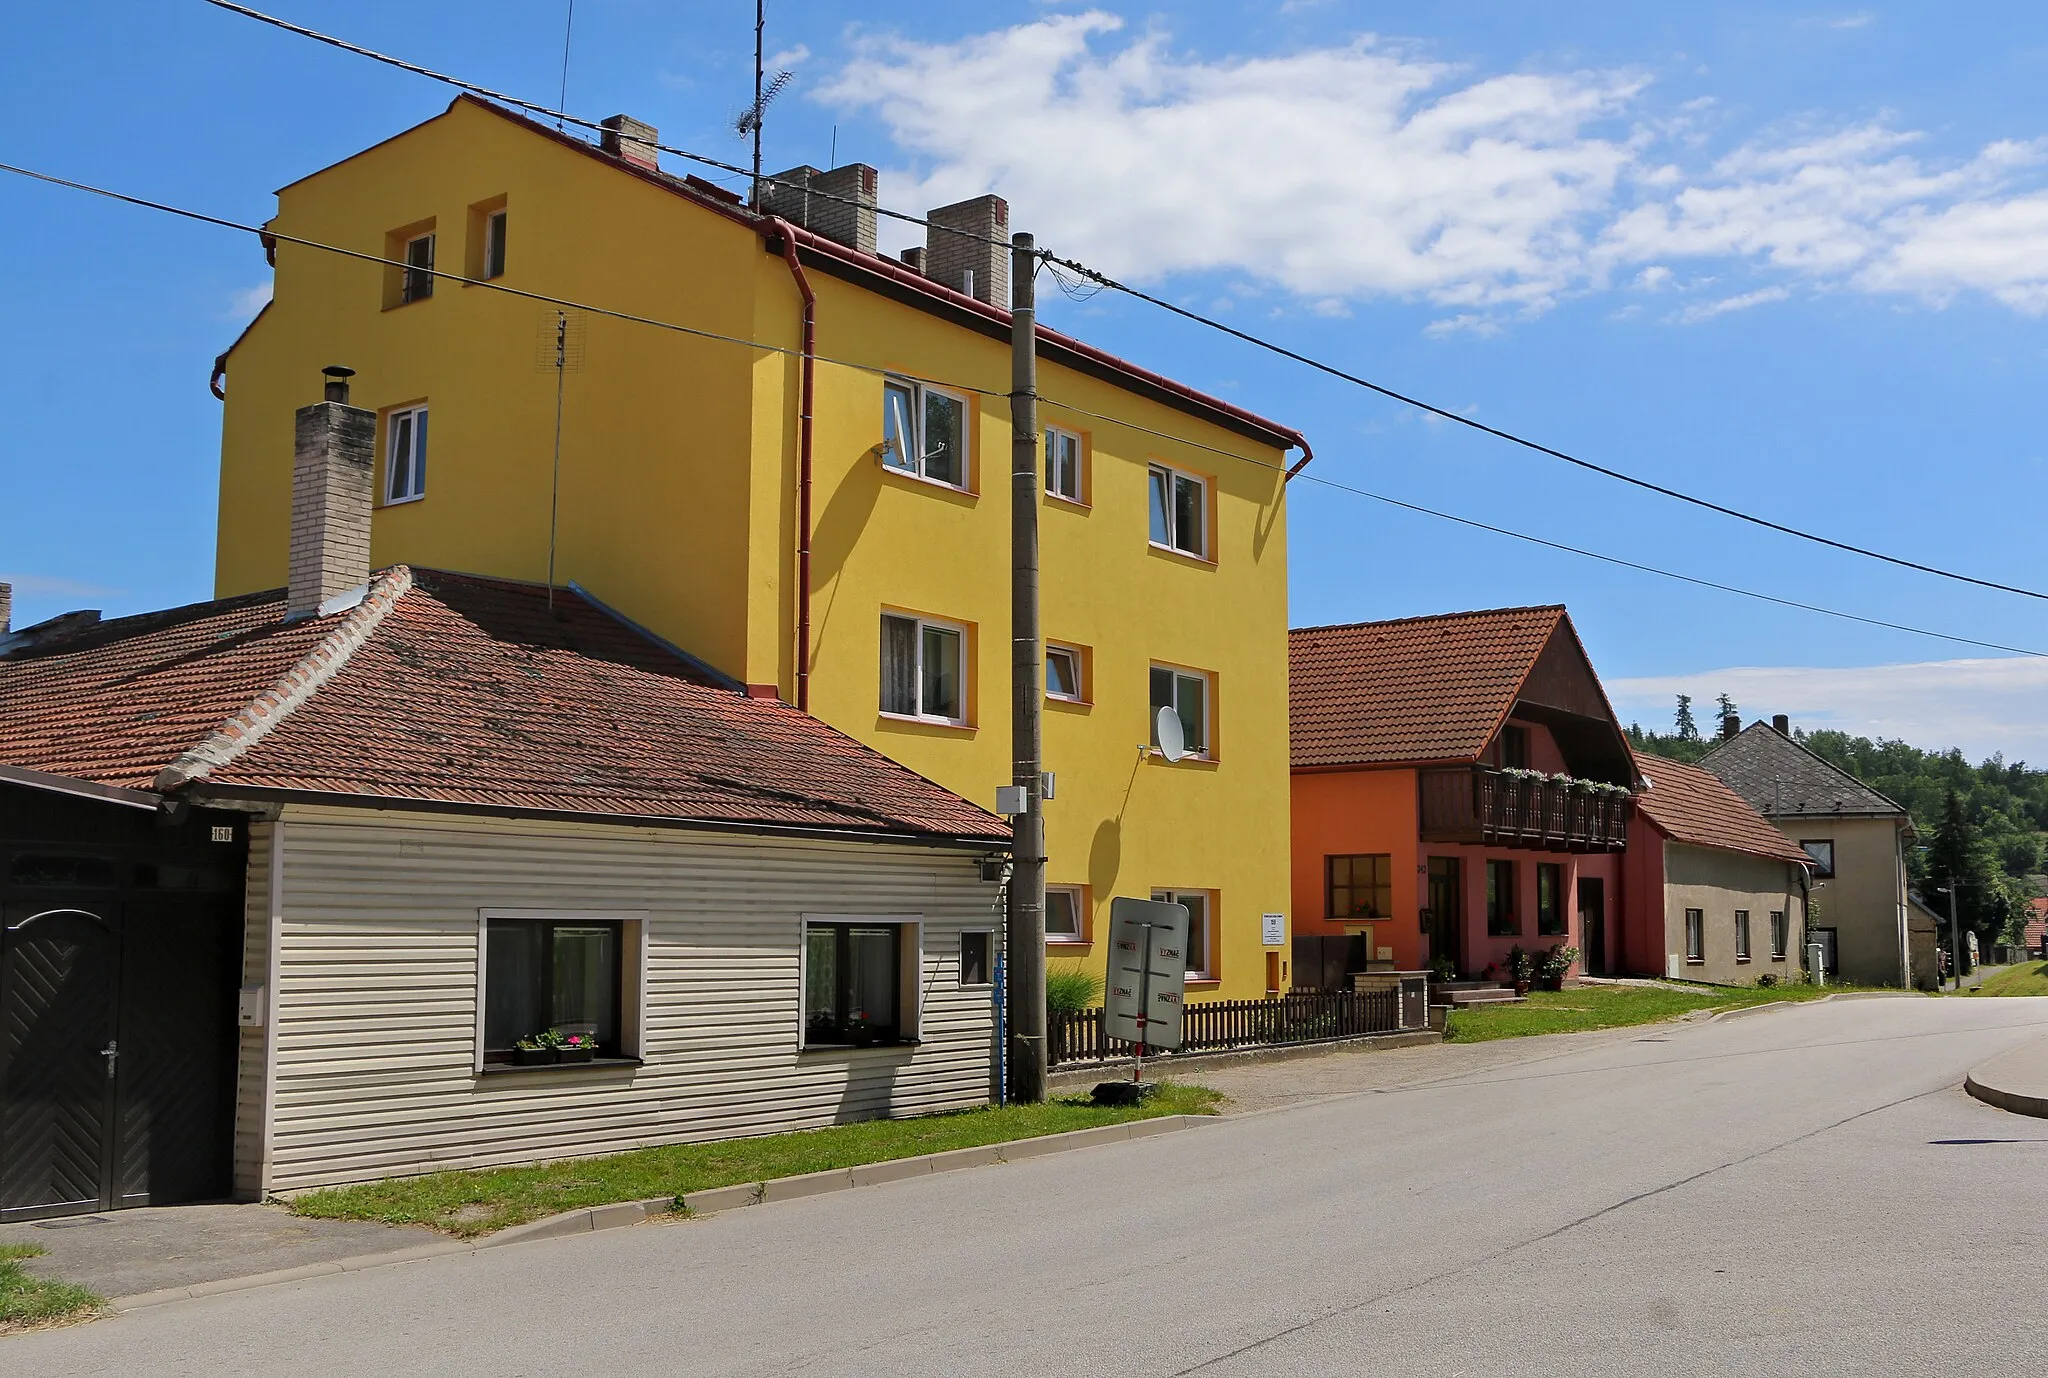 Photo showing: House No 159 in Stonařov, Czech Republic.